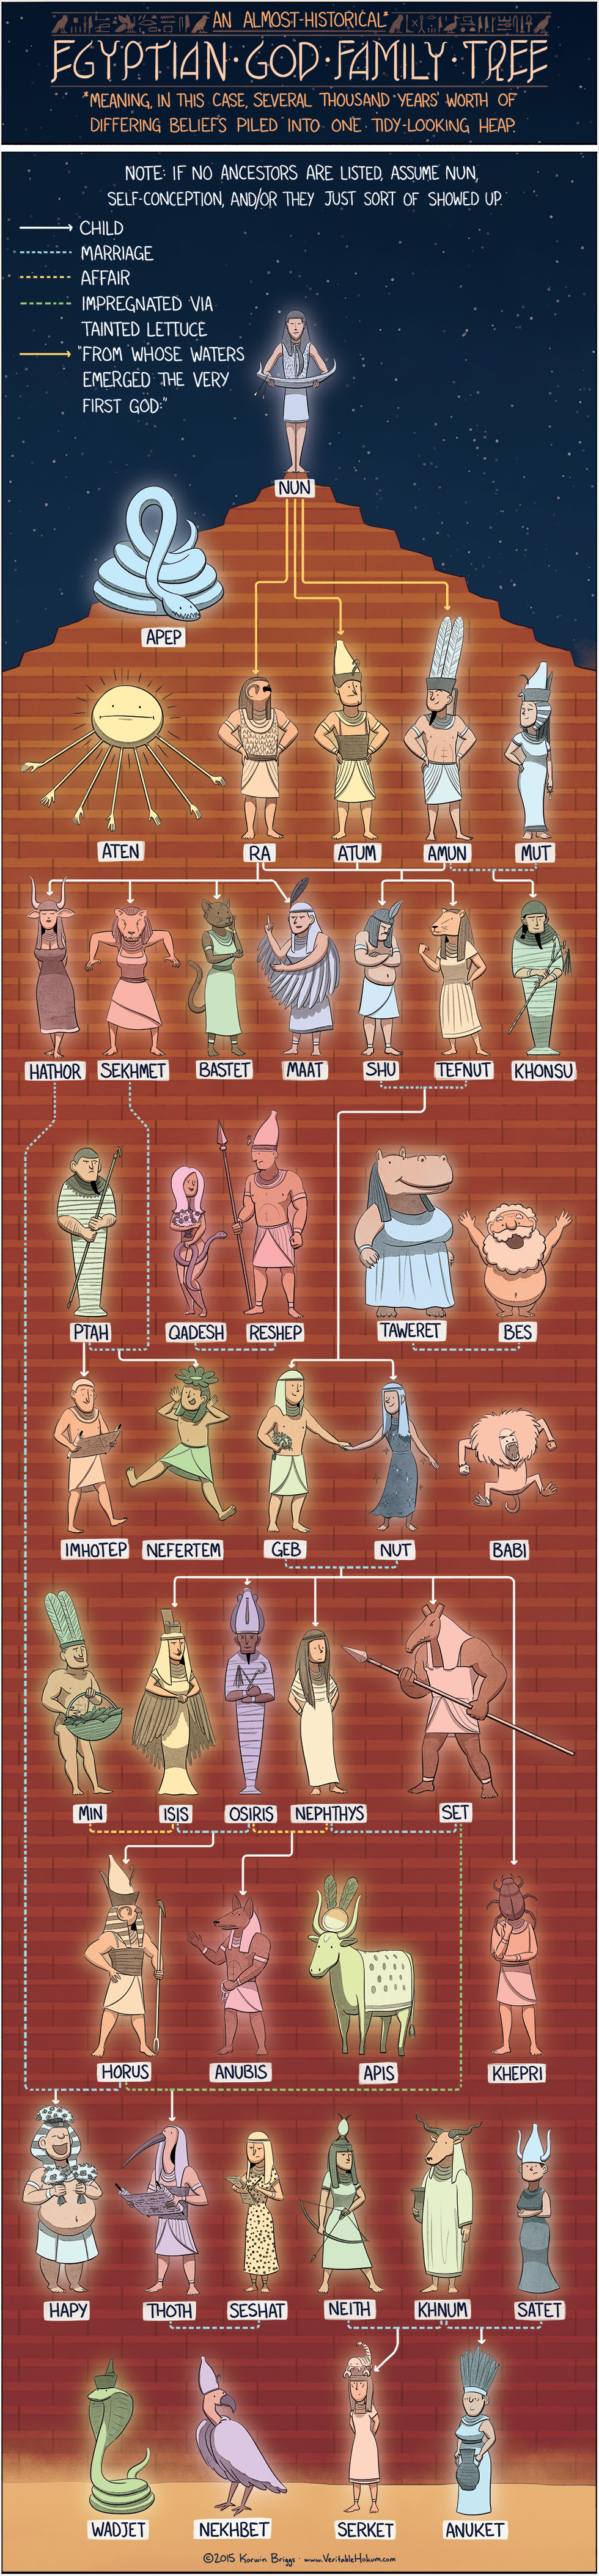 The Egyptian God Family Tree – Veritable Hokum